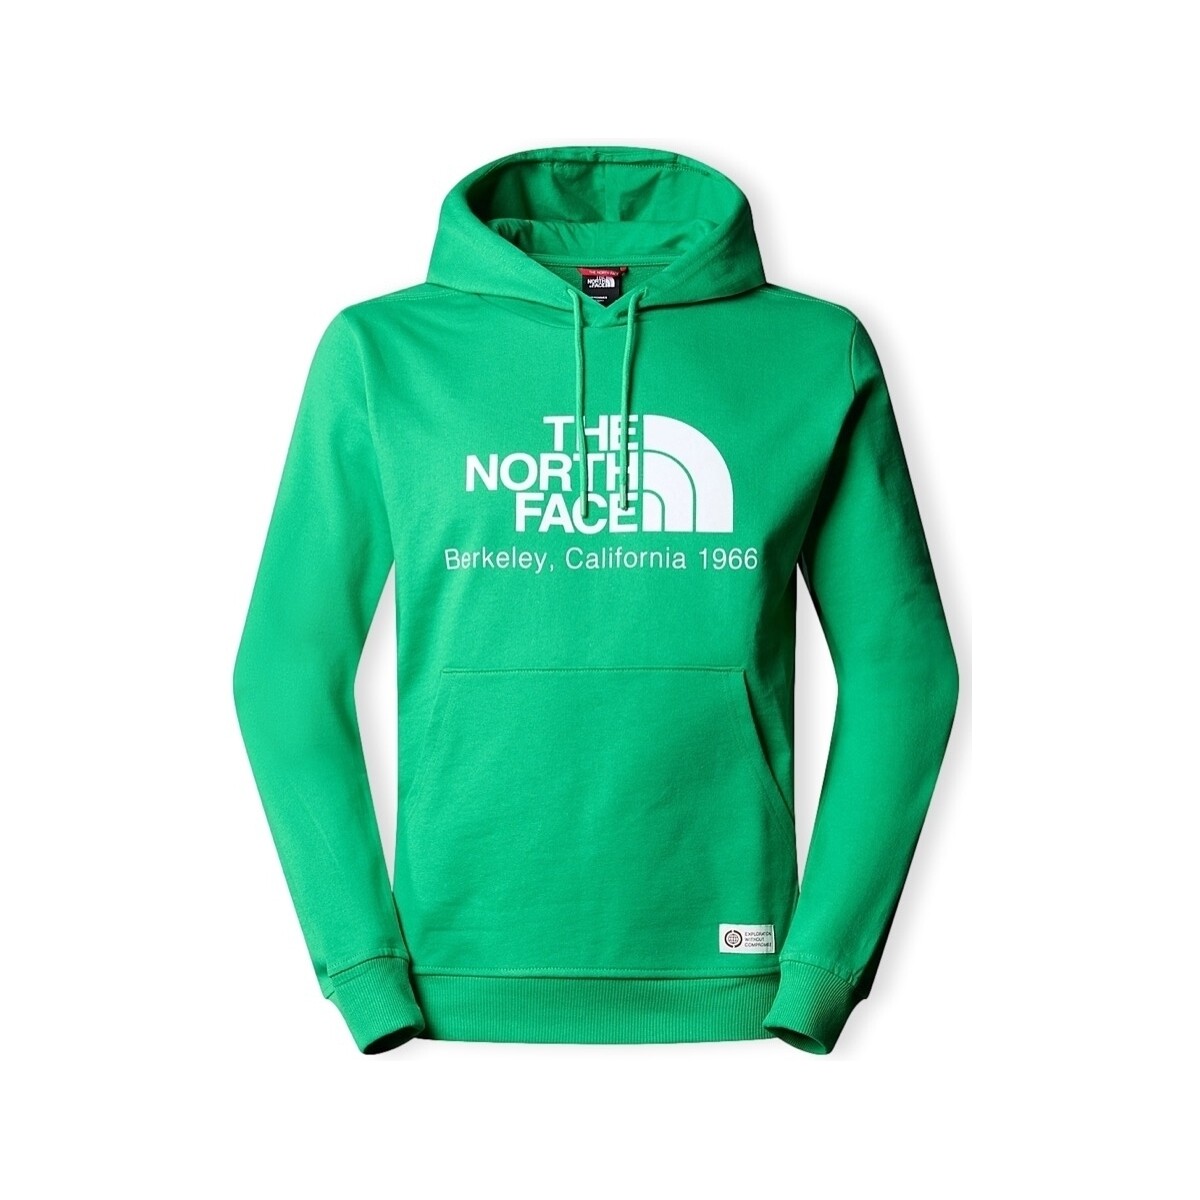 Ruhák Férfi Pulóverek The North Face Berkeley California Hoodie - Optic Emerald Zöld